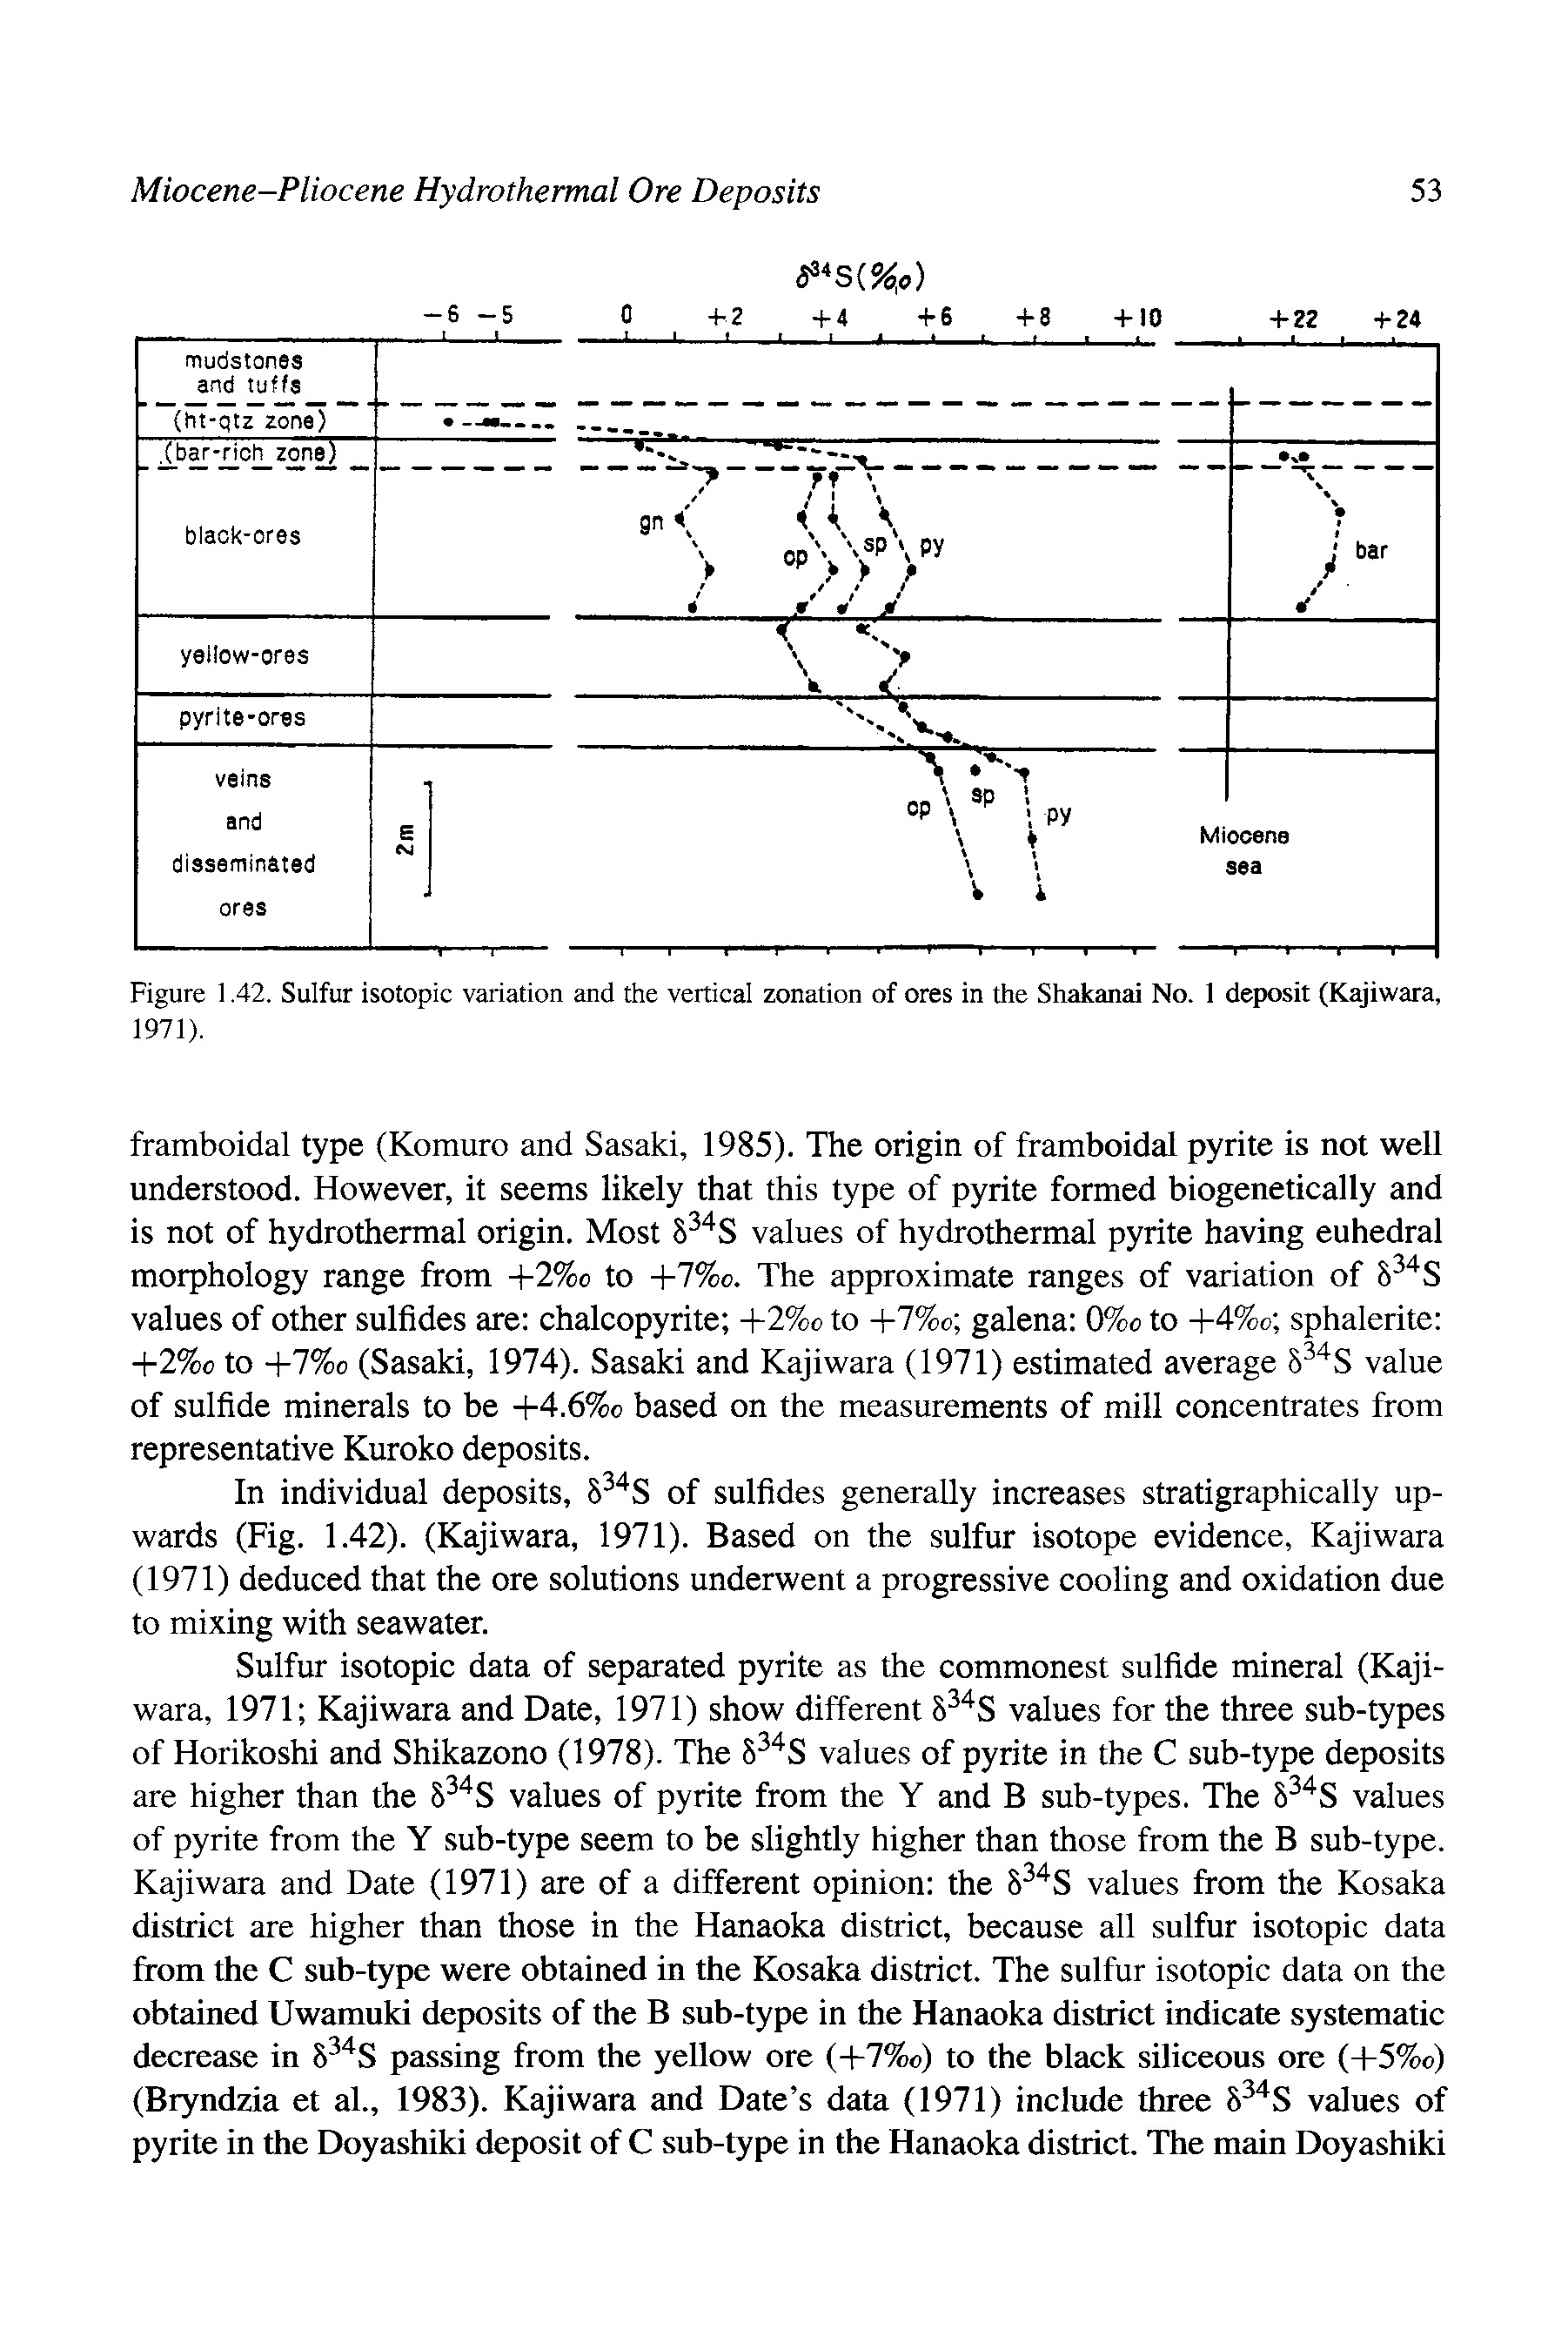 Figure 1.42. Sulfur isotopic variation and the vertical zonation of ores in the Shakanai No. 1 deposit (Kajiwara, 1971).